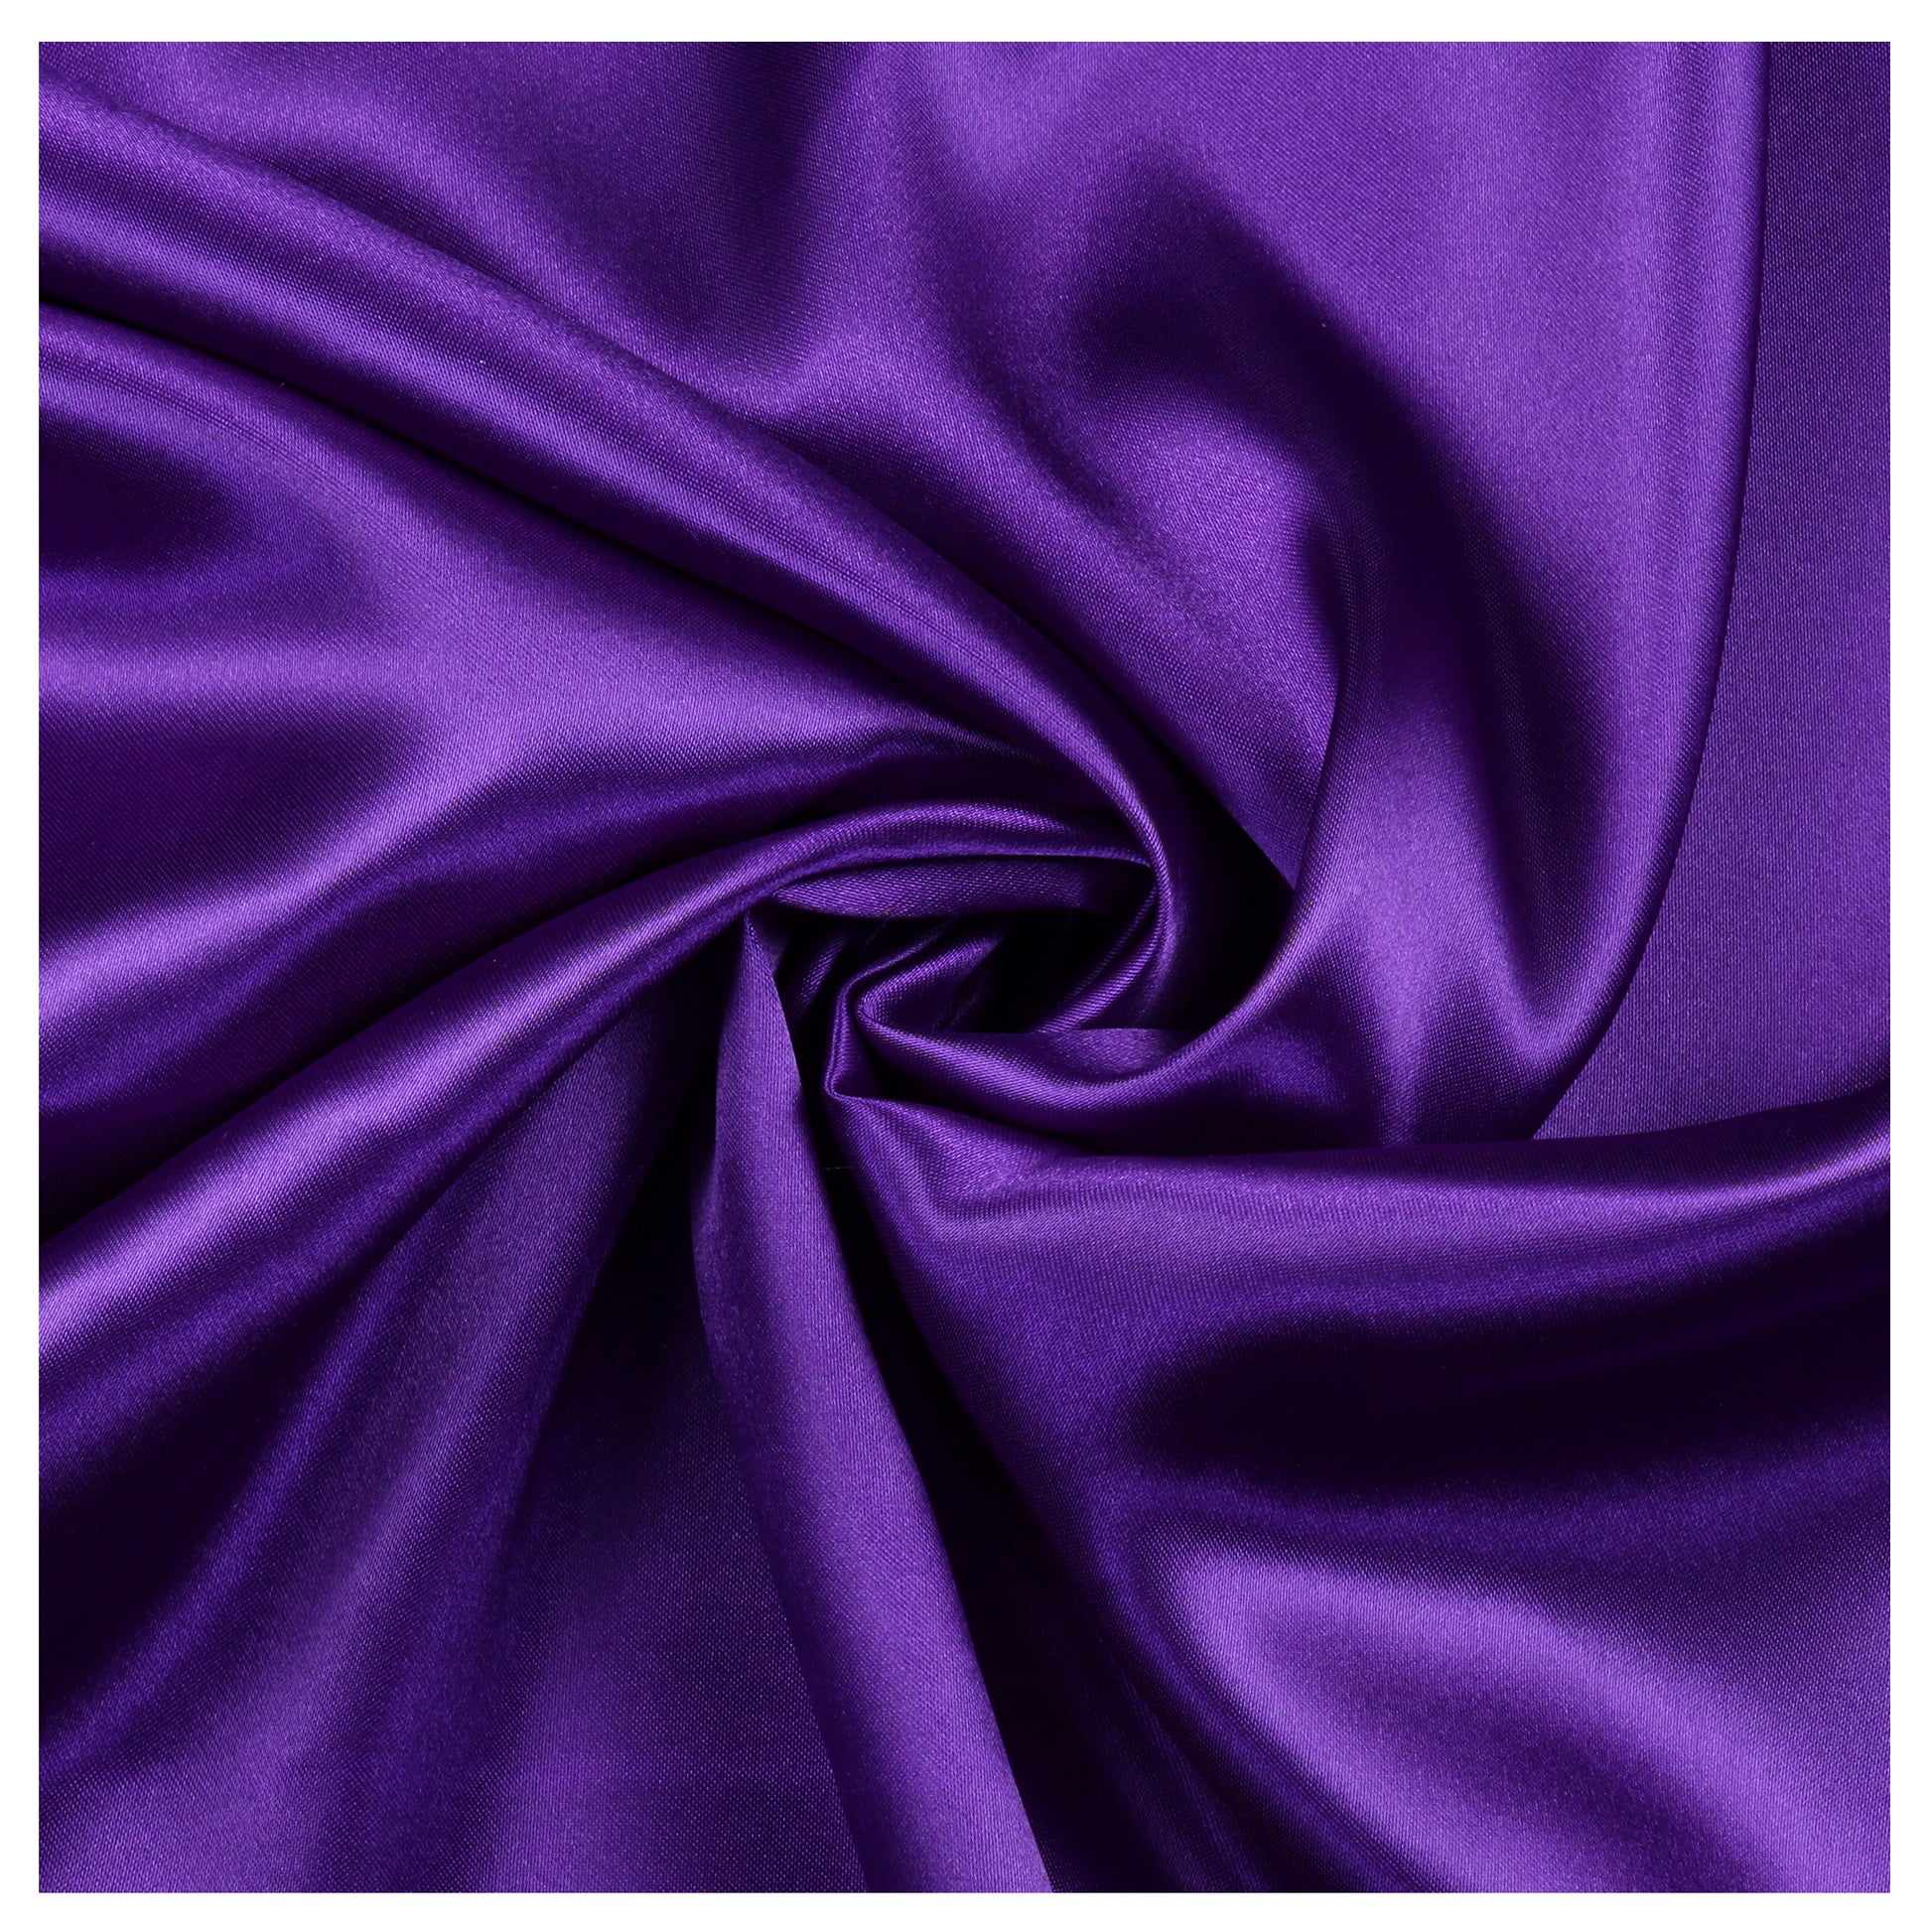 Cadbury Purple,38981ceb-f9c9-458e-9d77-8e5f2398a1bf